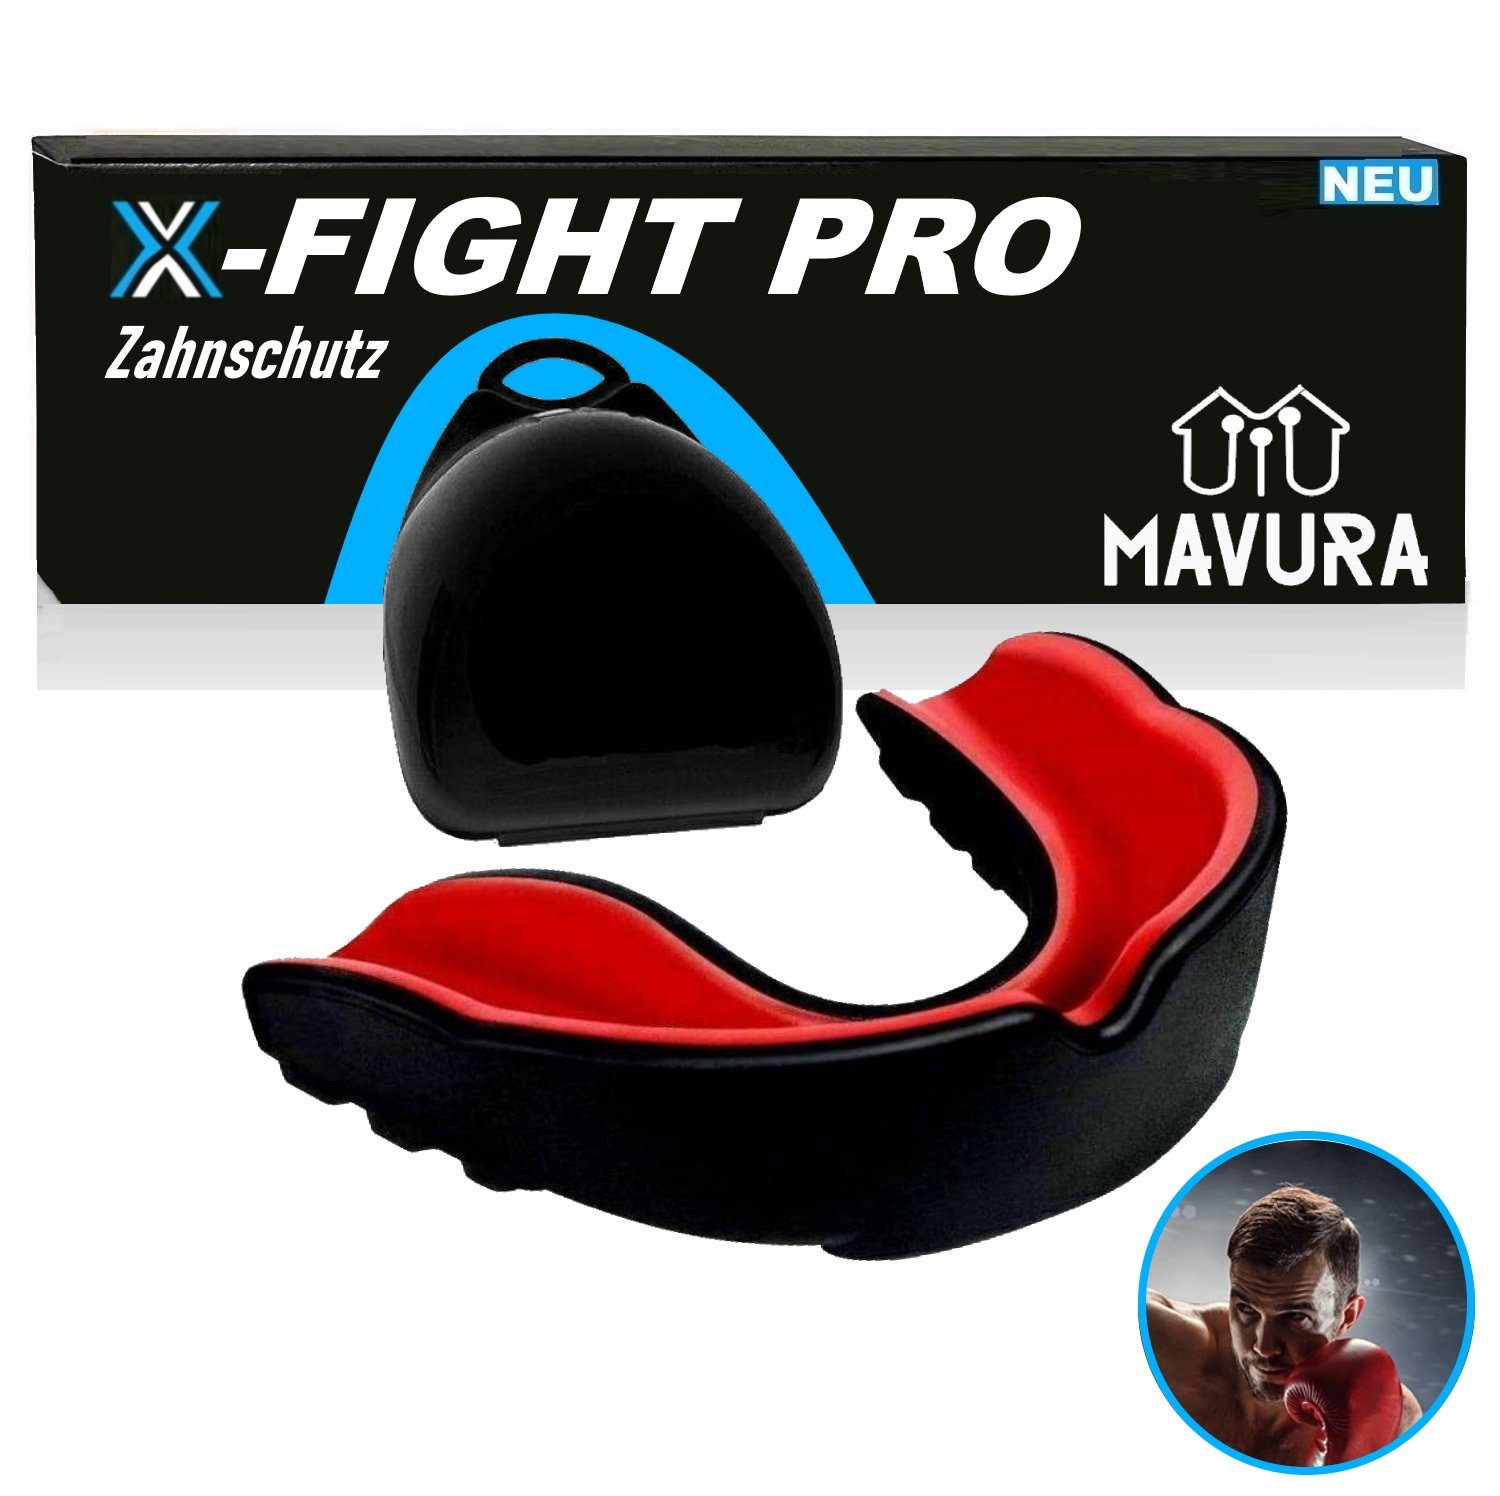 MAVURA Zahnschutz X-FIGHT Pro Mundschutz Zahnschutz Boxen Kampfsport Zahnschützer (Sport MMA Football Muay Thai Hockey), Anti Shock Anpassbar Leichte Atmung Einheitsgröße